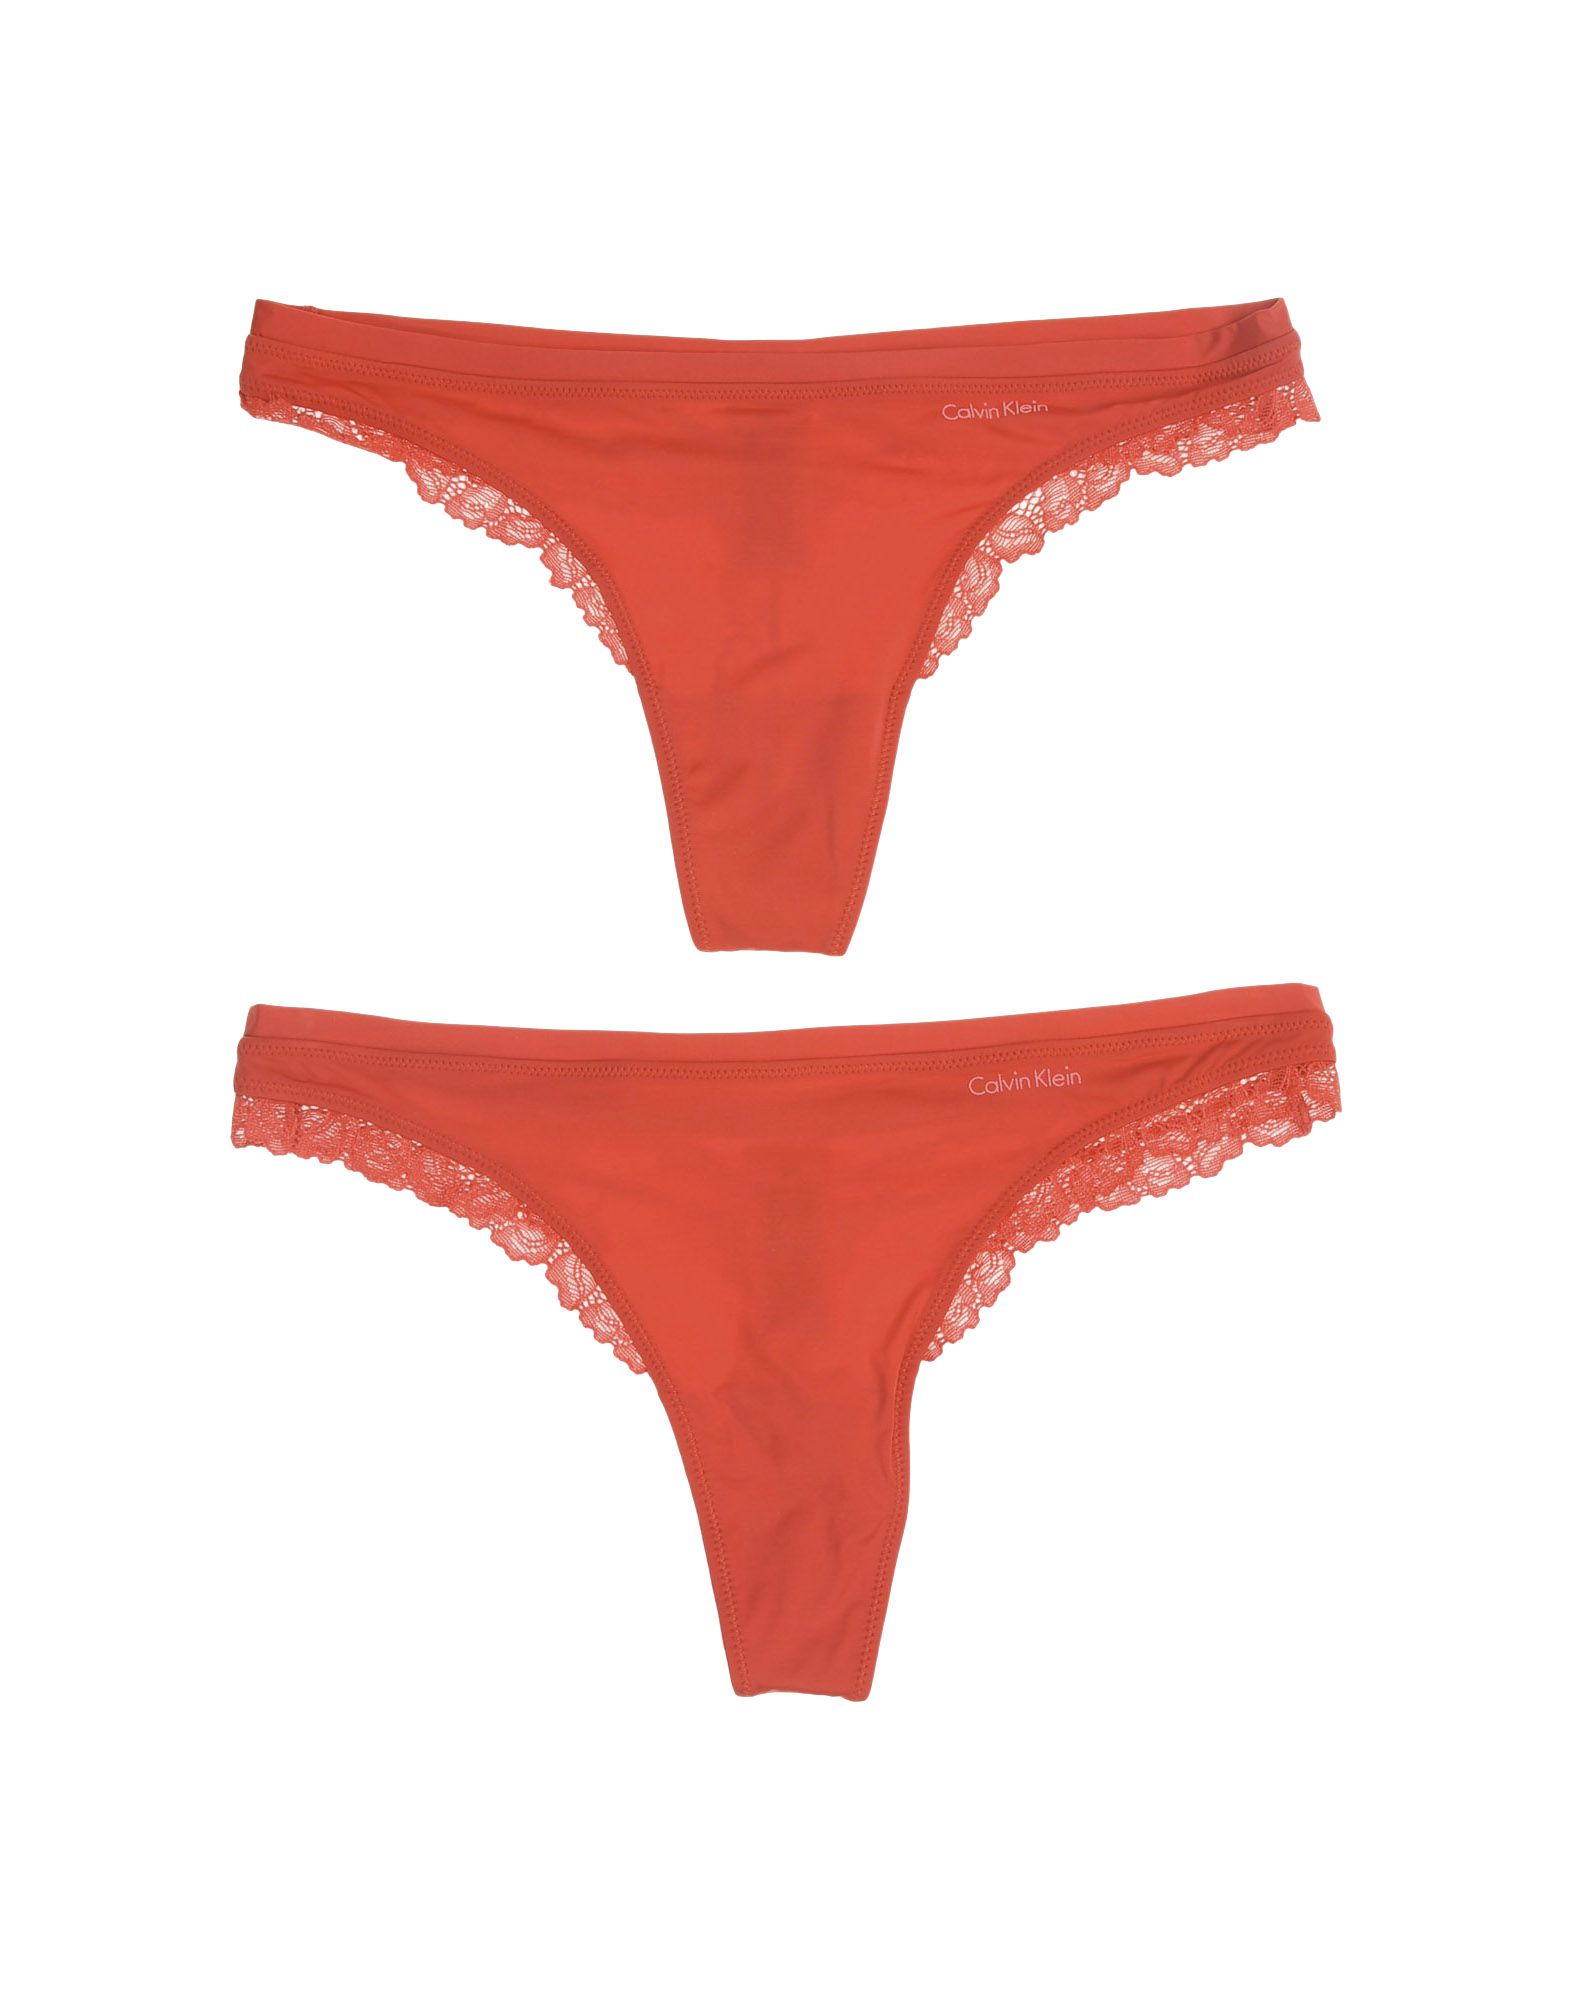 Foto Calvin Klein Underwear Tangas Mujer Rojo